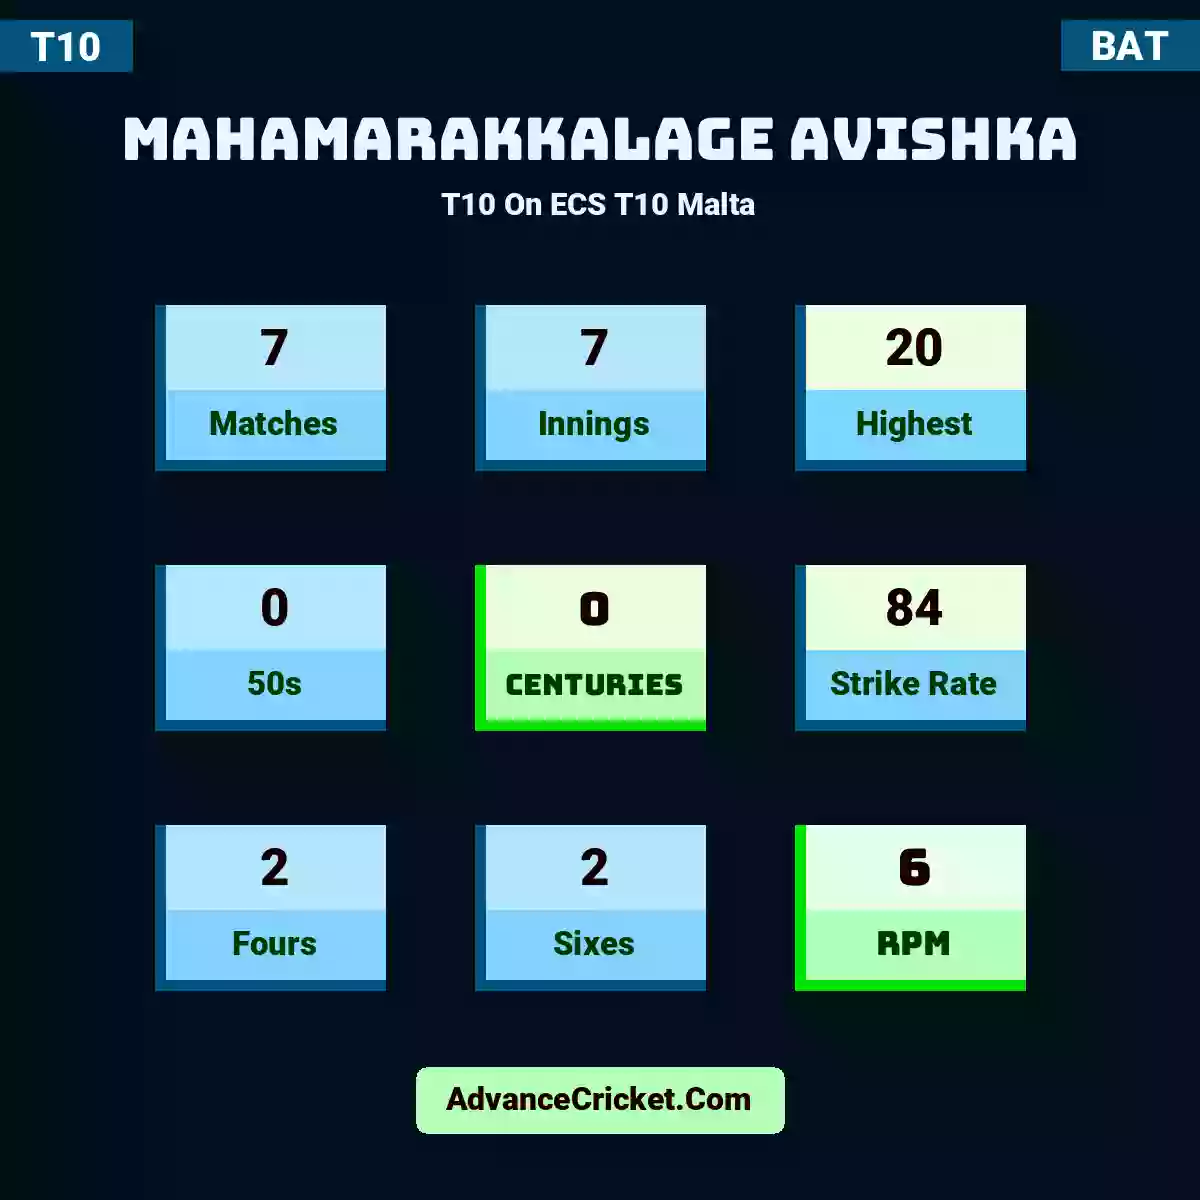 Mahamarakkalage Avishka T10  On ECS T10 Malta, Mahamarakkalage Avishka played 7 matches, scored 20 runs as highest, 0 half-centuries, and 0 centuries, with a strike rate of 84. M.Avishka hit 2 fours and 2 sixes, with an RPM of 6.